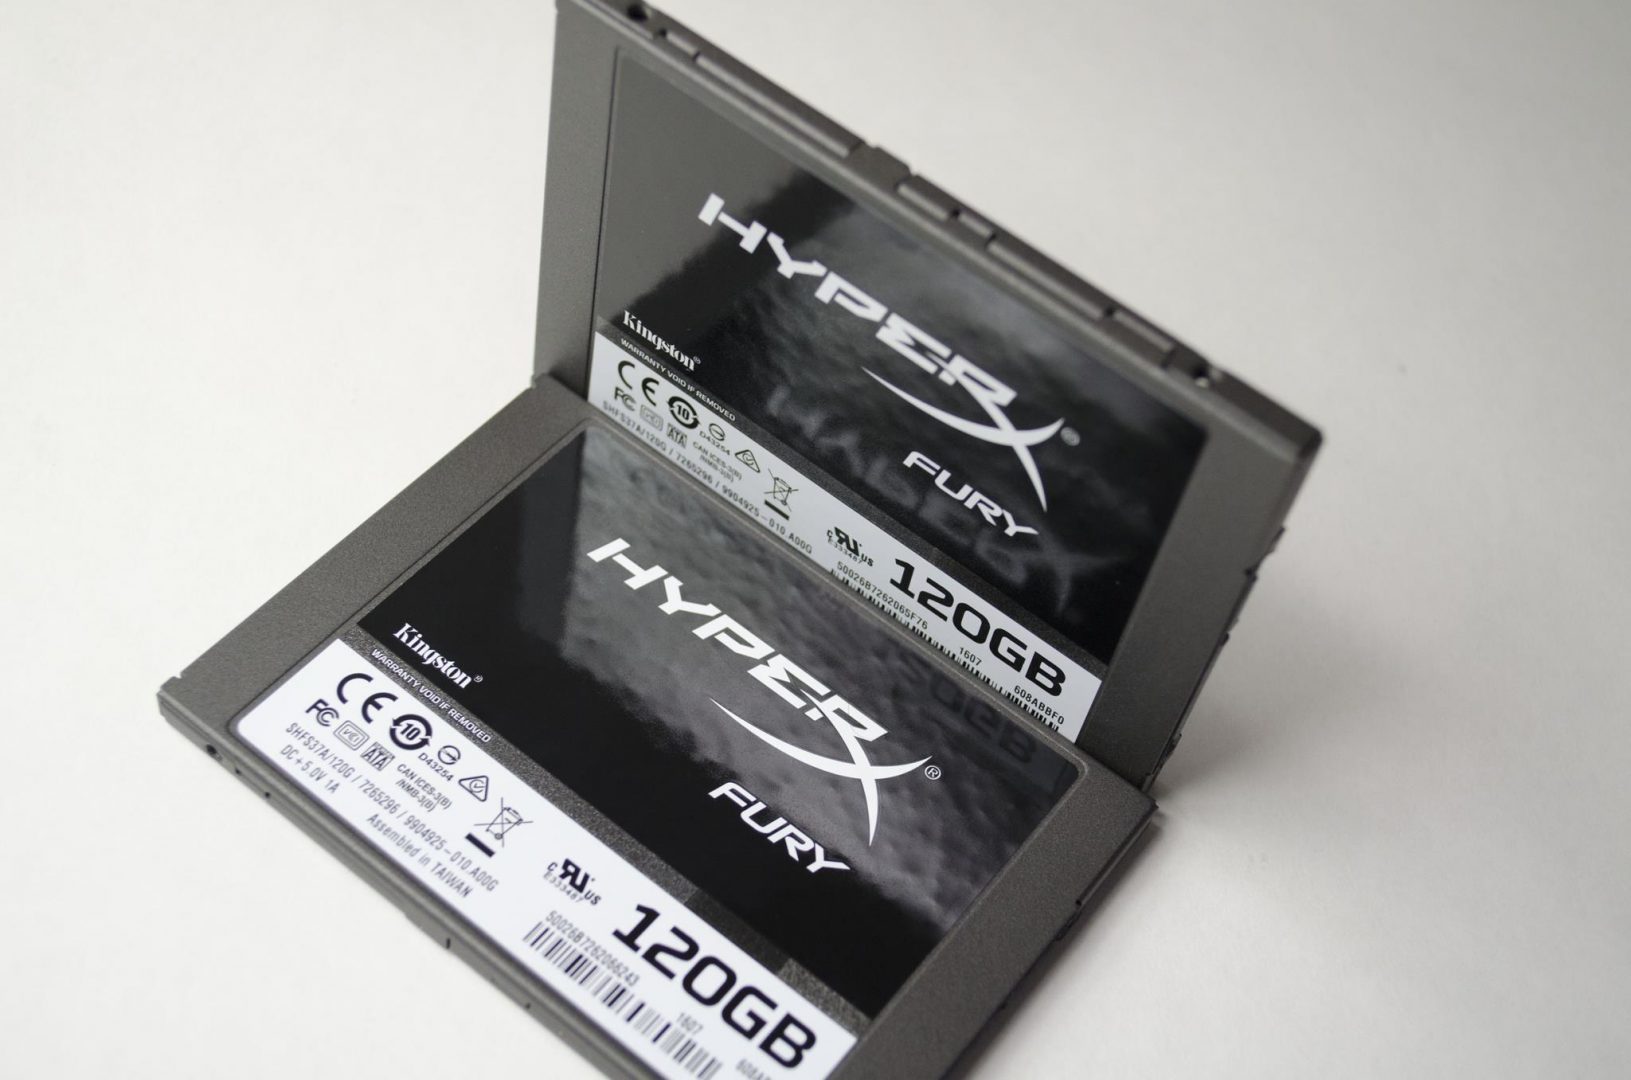 HyperX Fury 120GB SSD Tests - EnosTech.com